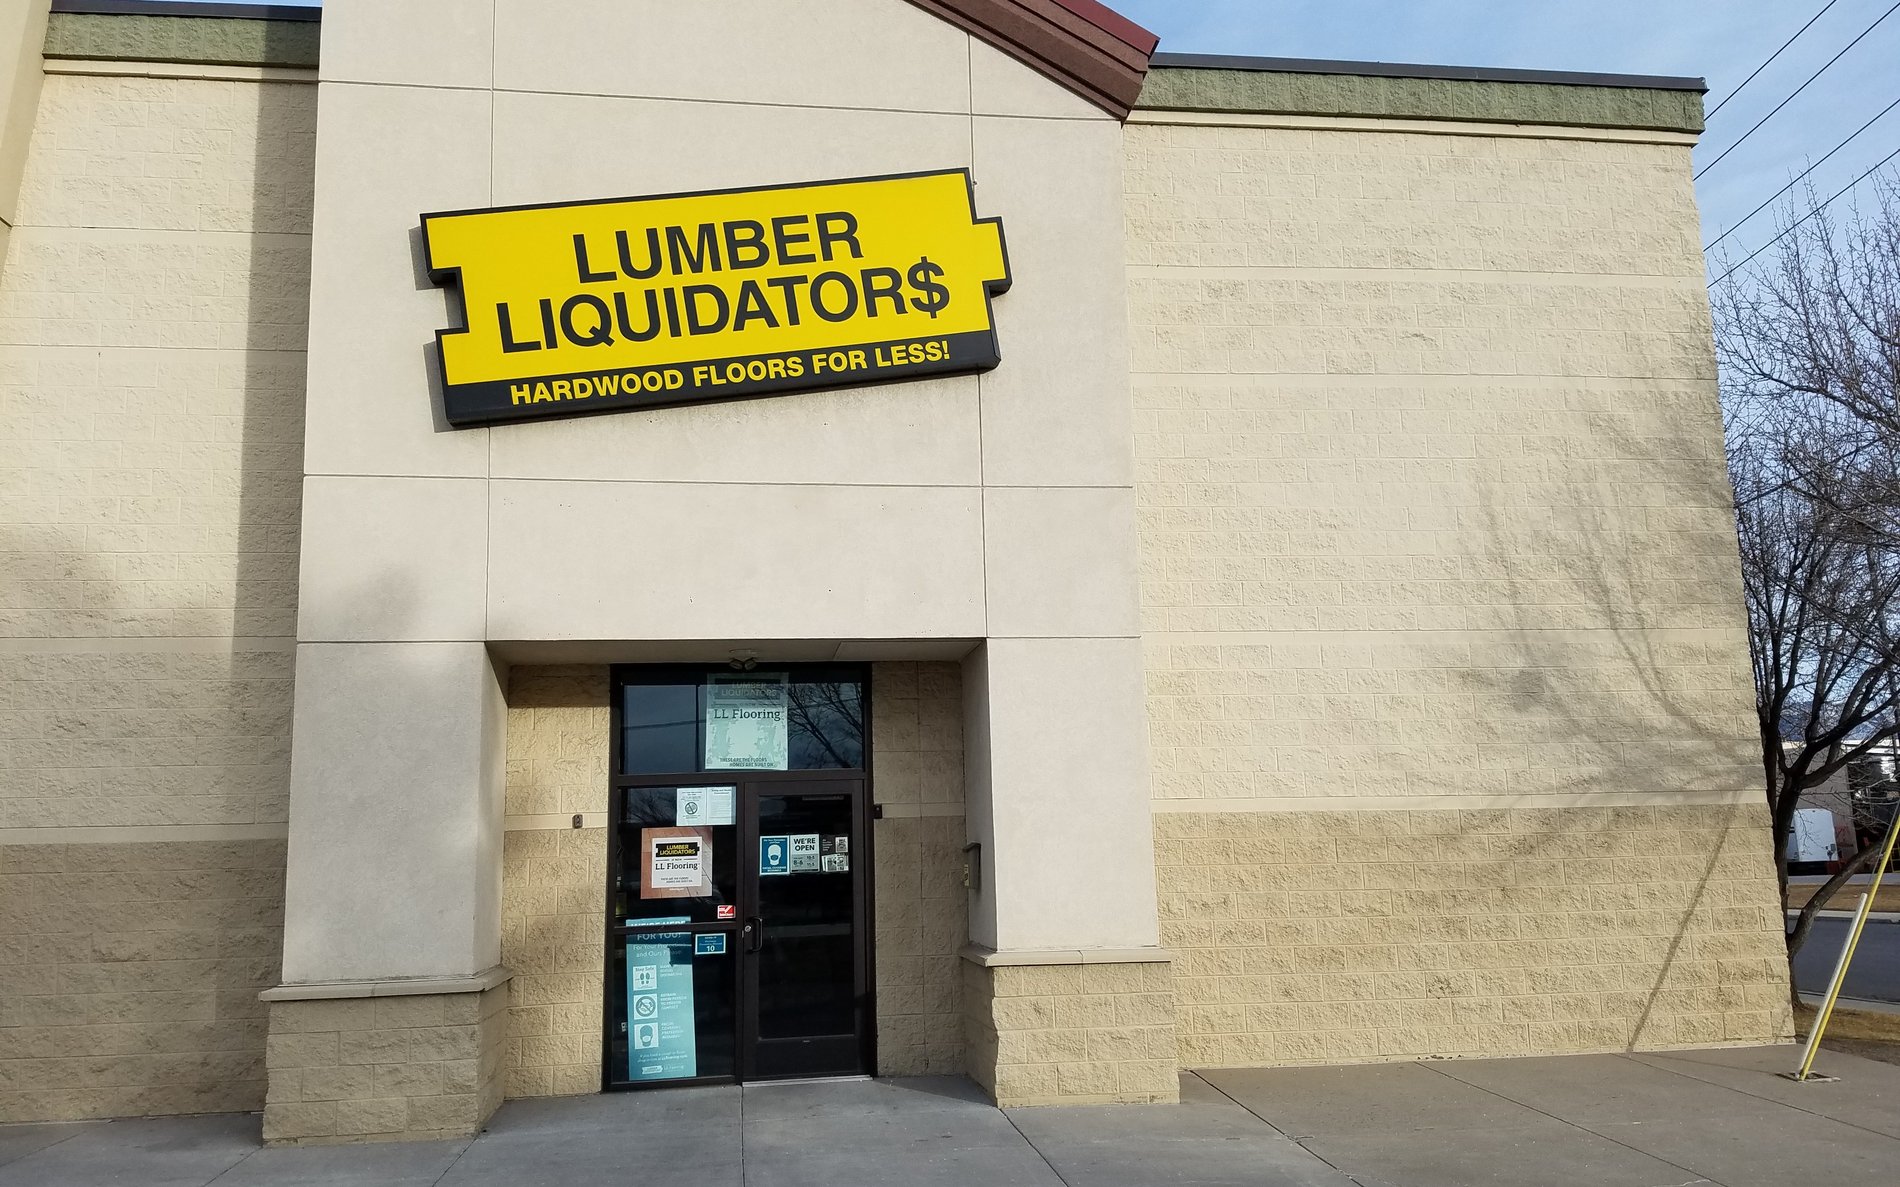 LL Flooring #1044 Salt Lake City | 389 West 1830 South | Storefront